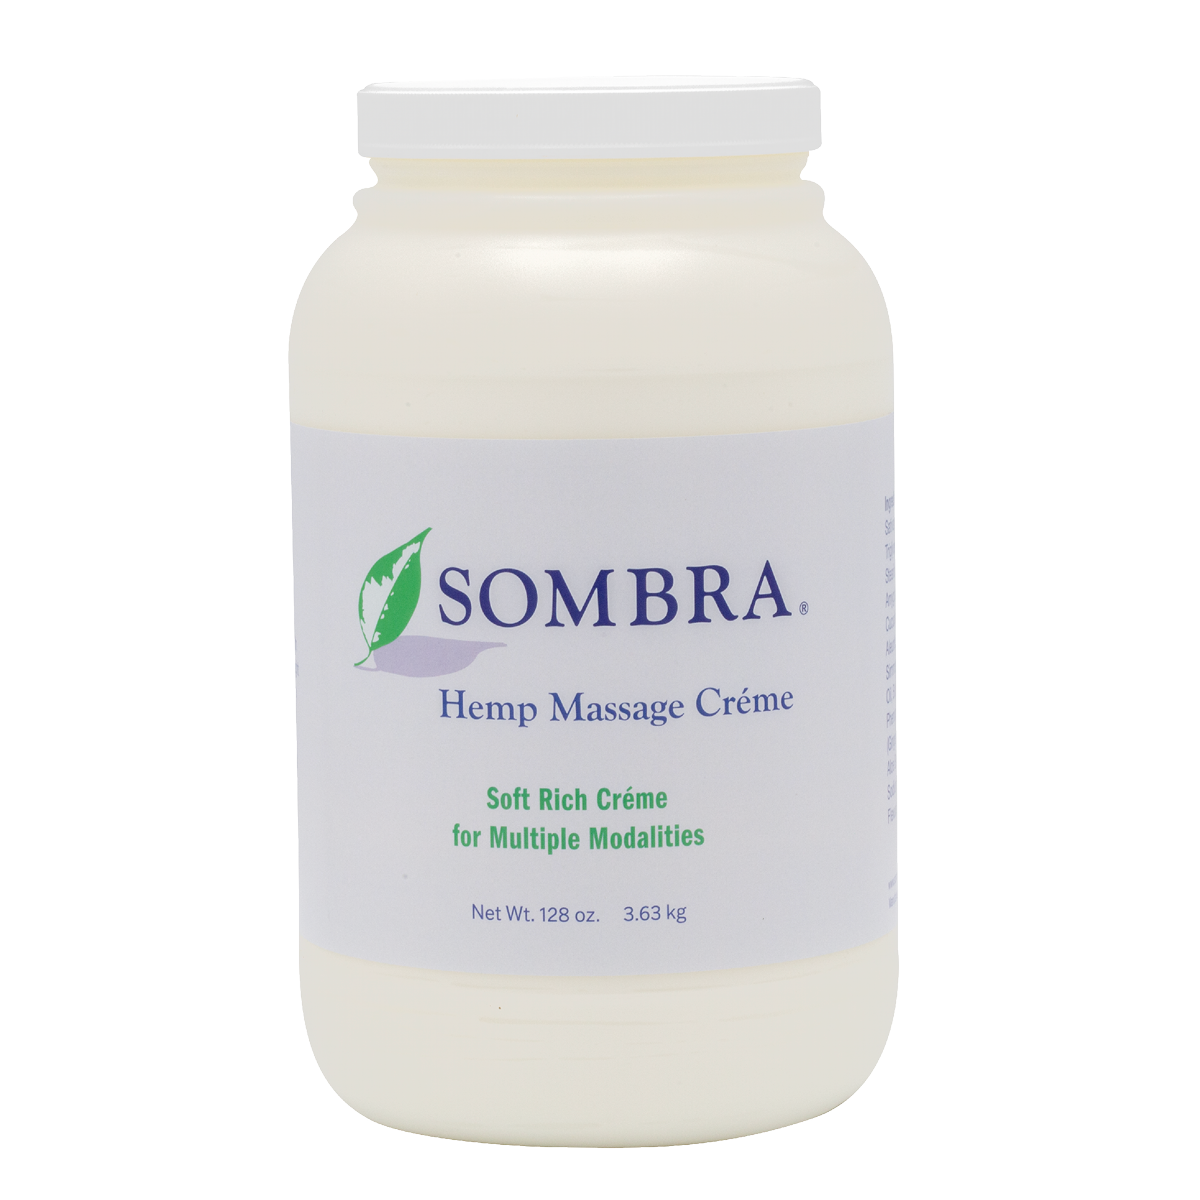 Gallon size Sombra Hemp Massage Creme